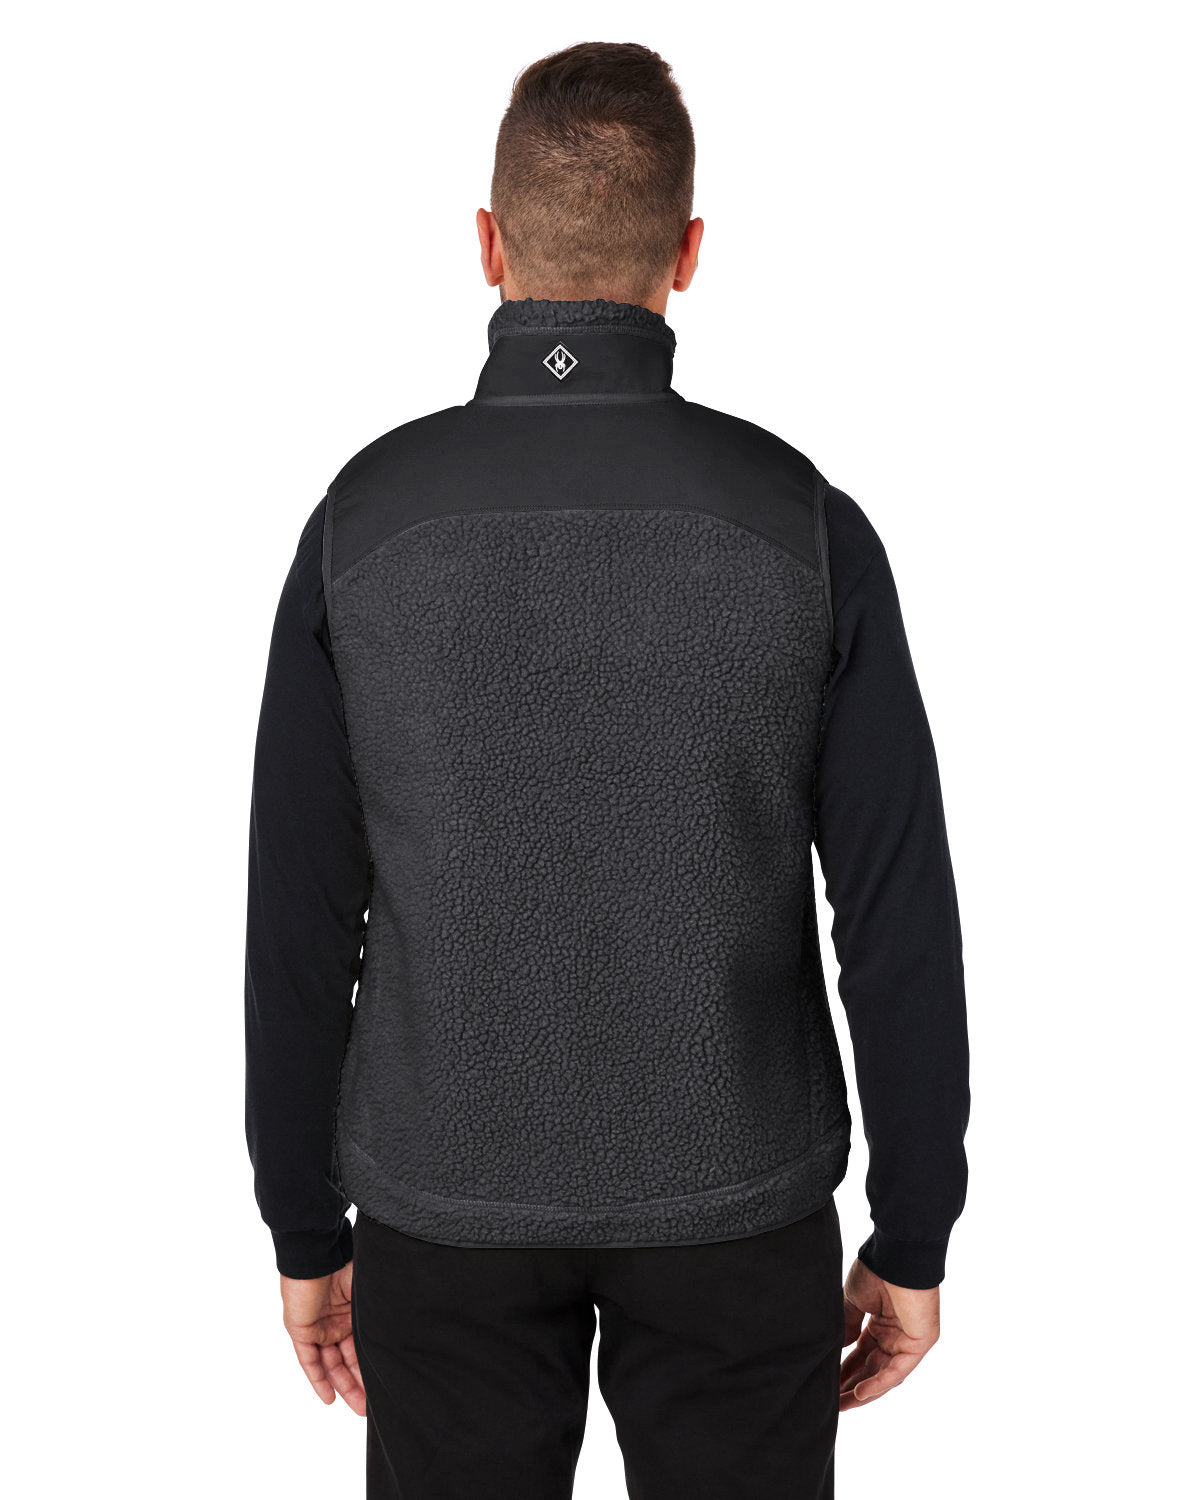 Custom Spyder Unisex Venture Sherpa Vests, Black